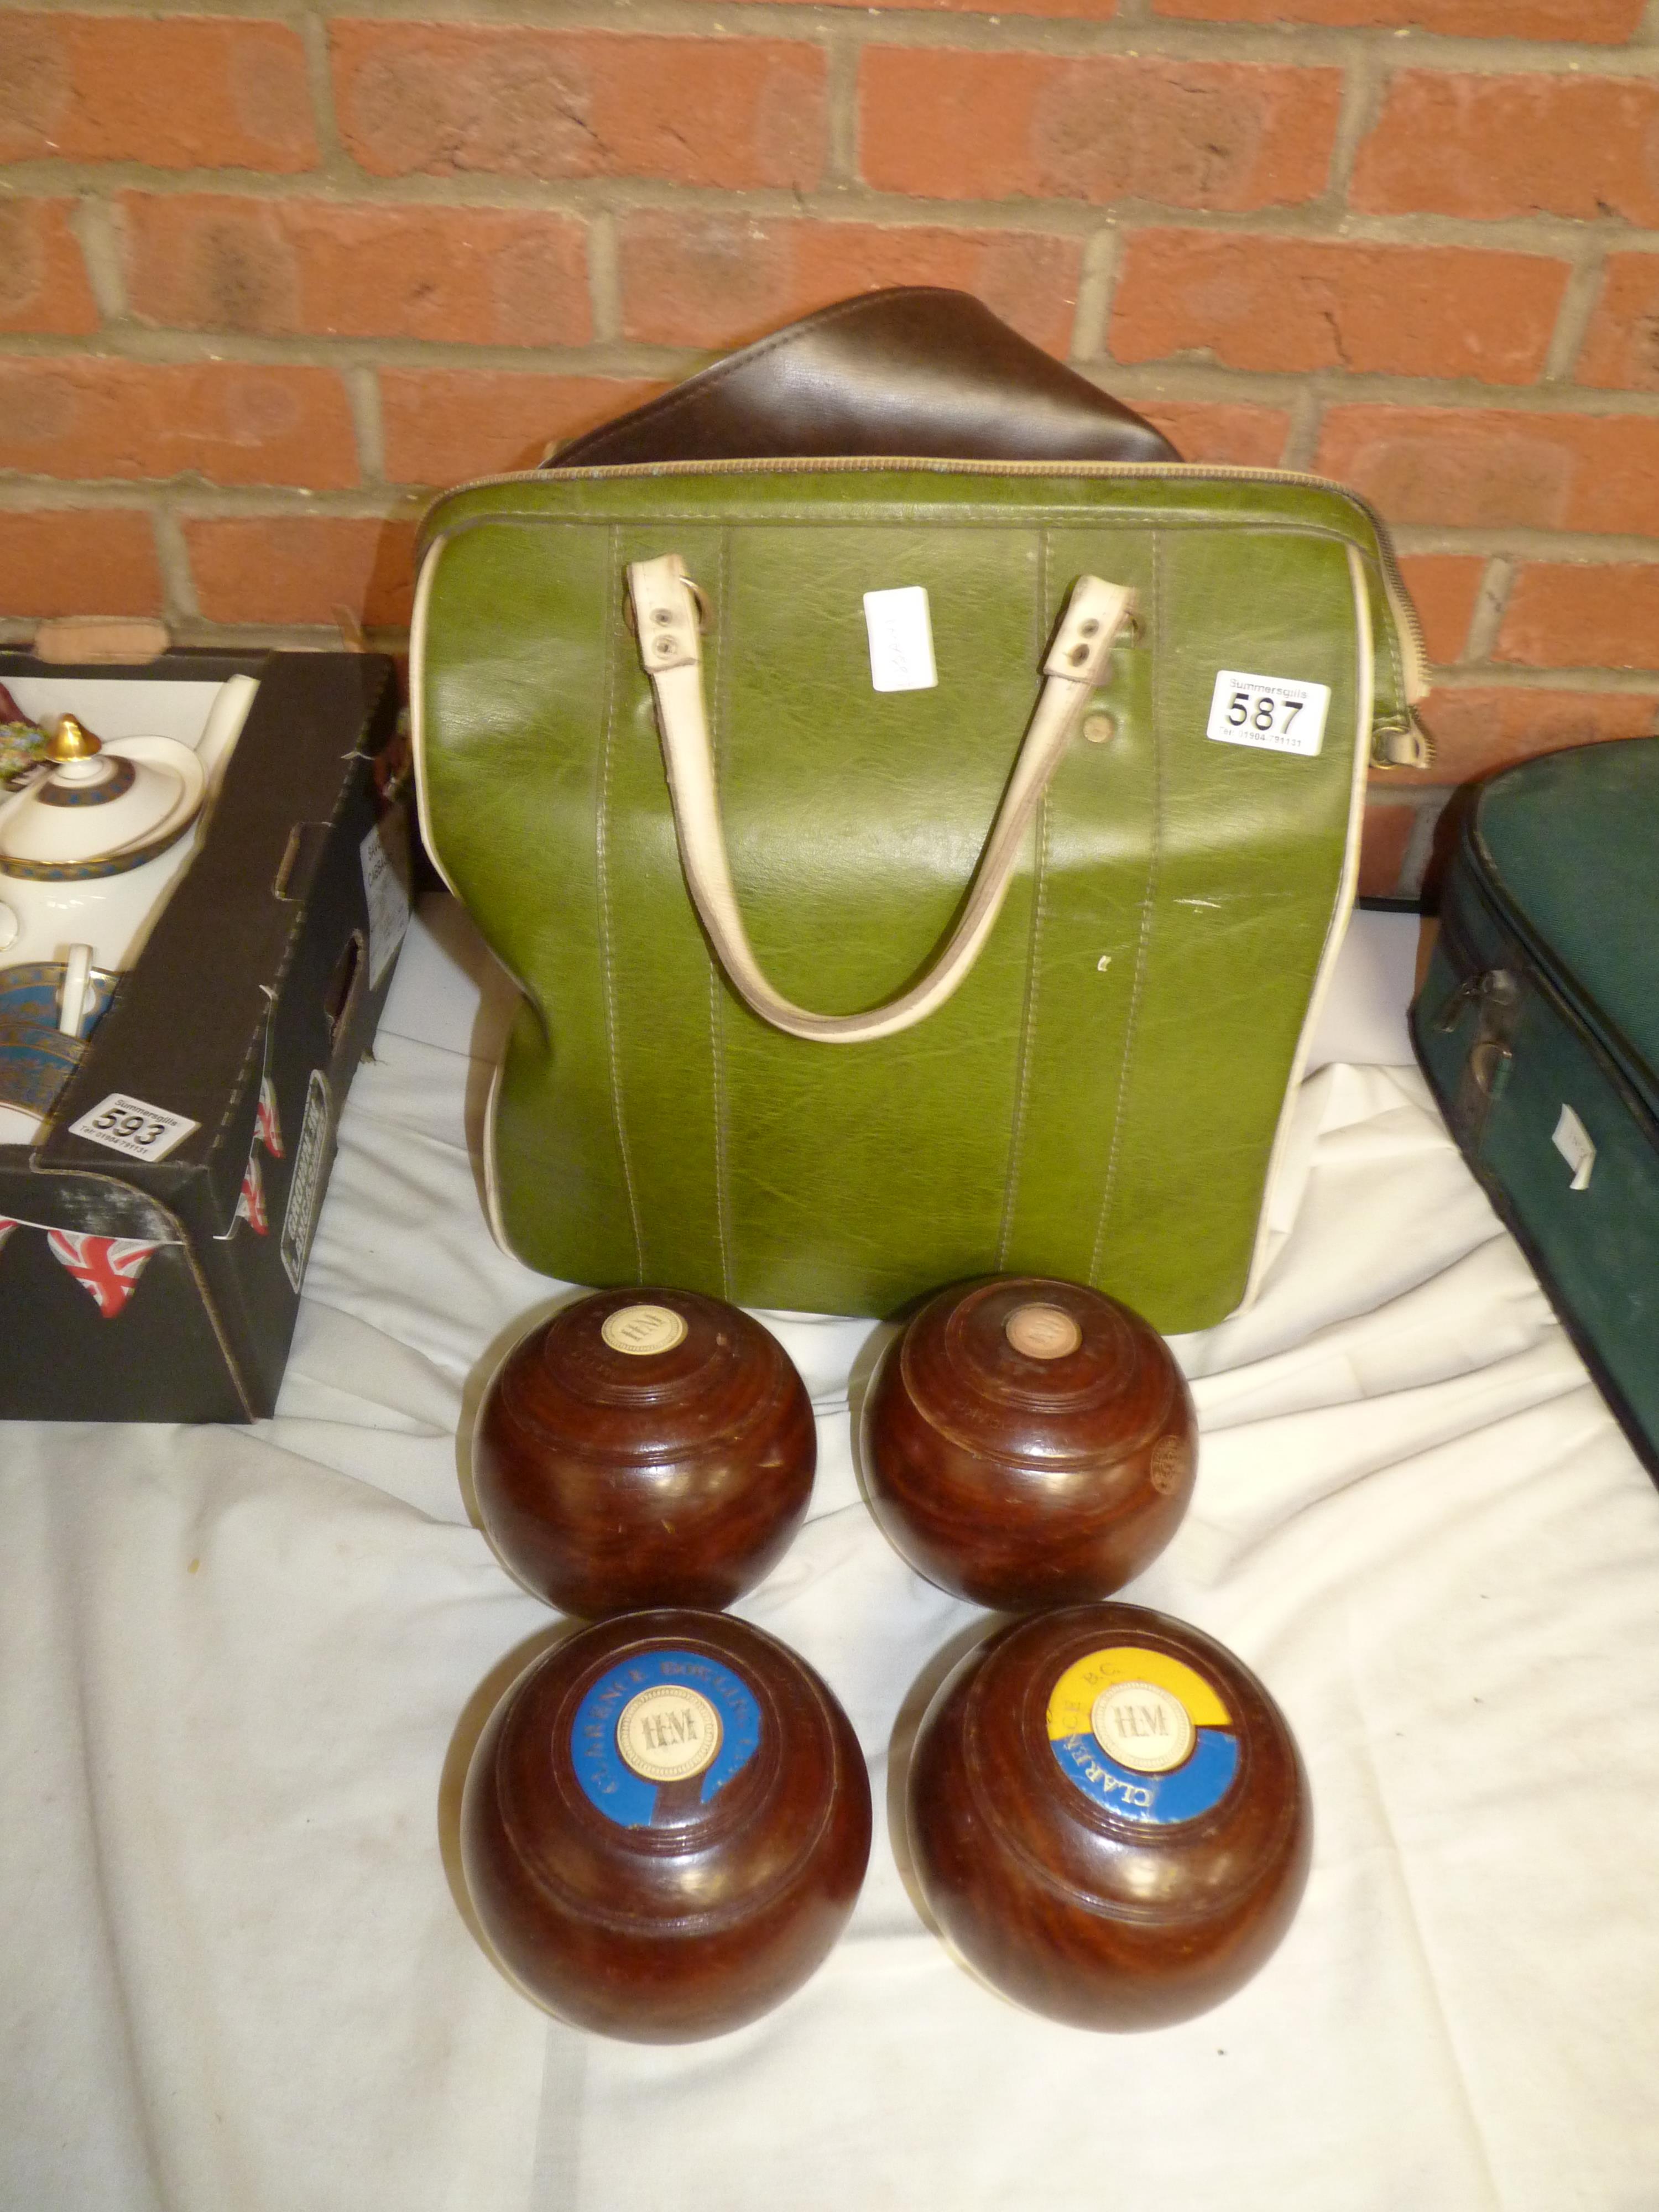 4 Wooden bowls and bag